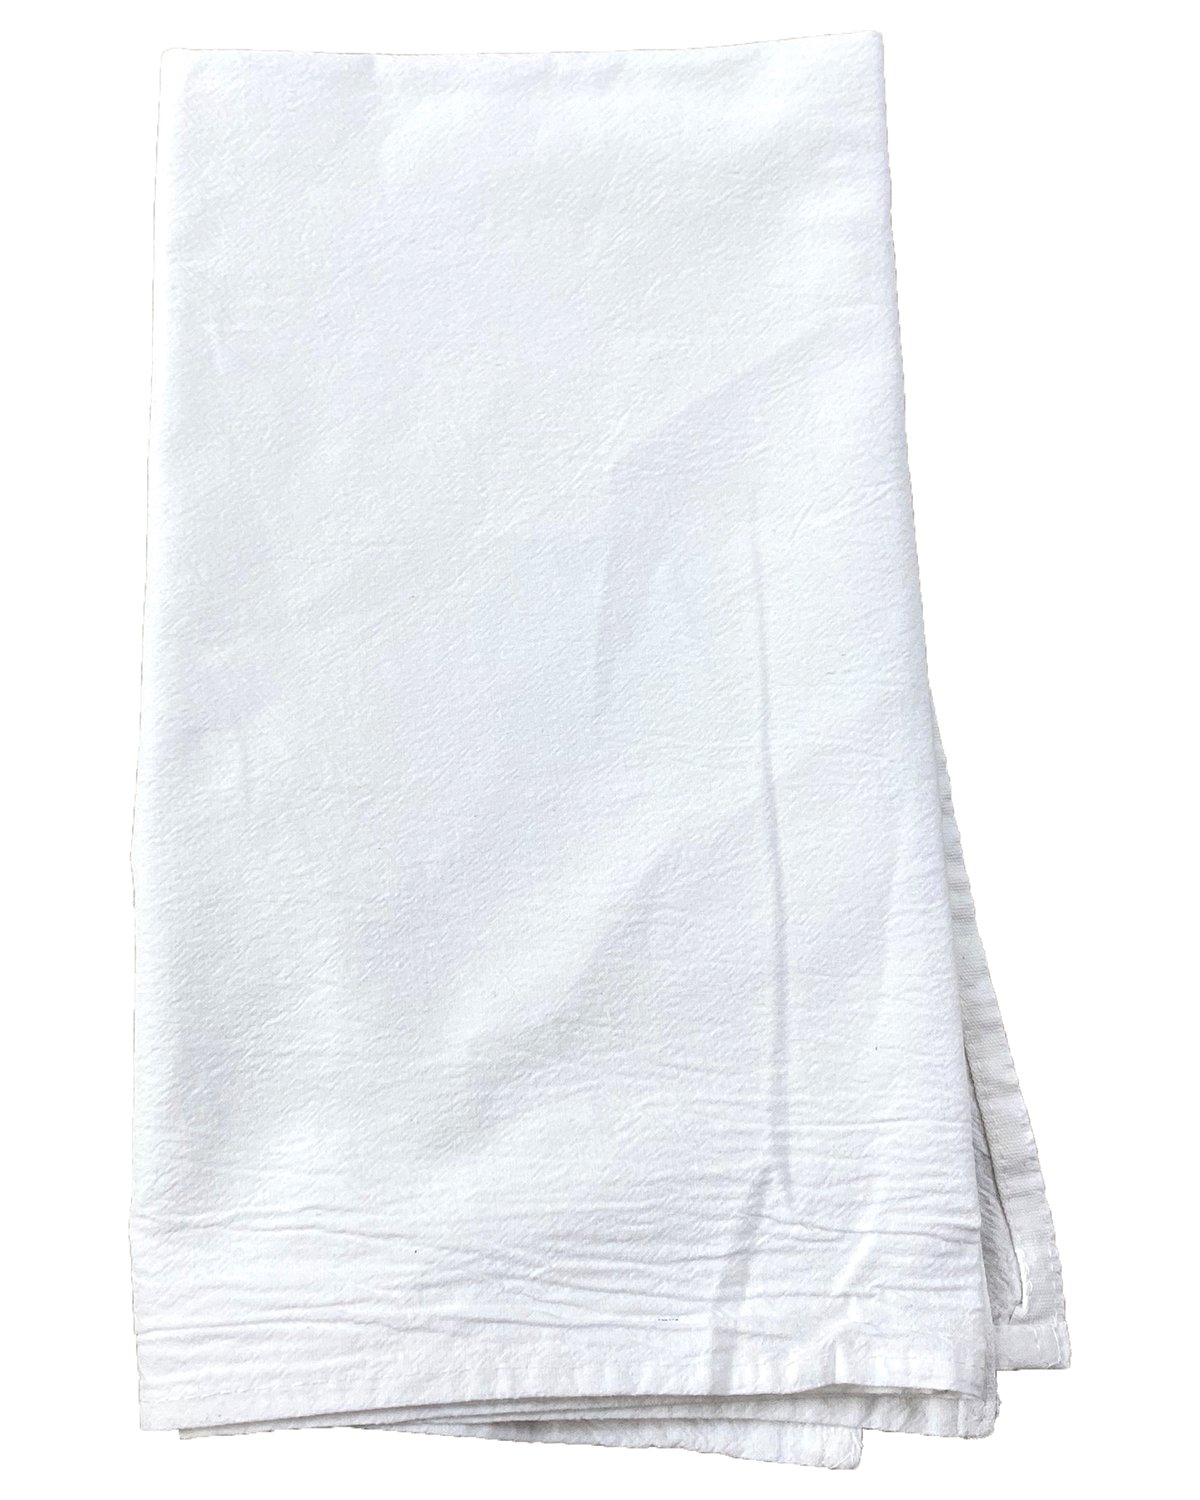 American Flour Sack Towel 15x25-Craft Basics